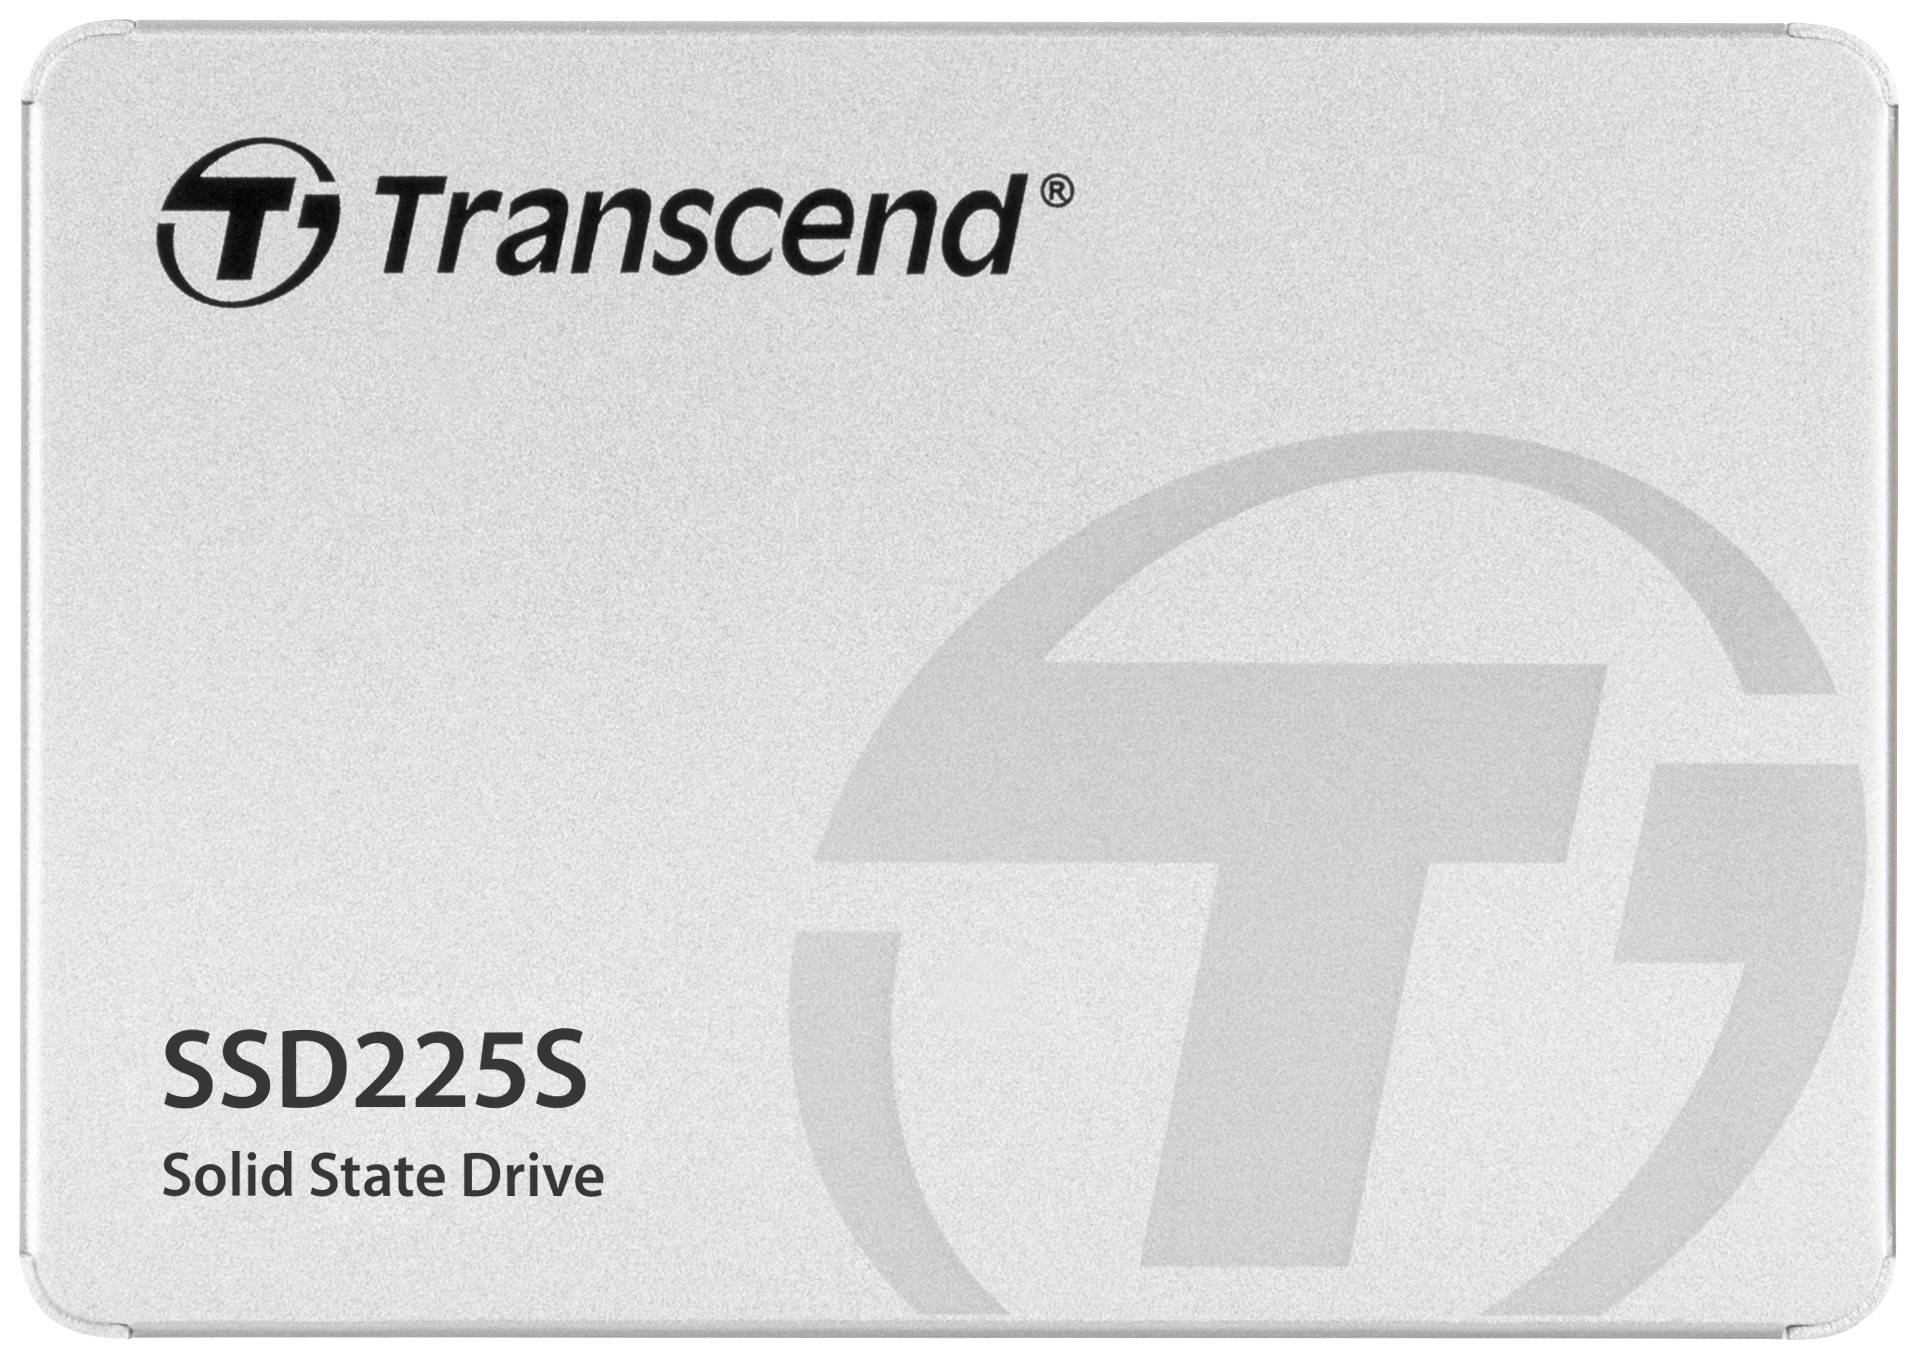 TRANSCEND SSD225S 500GB